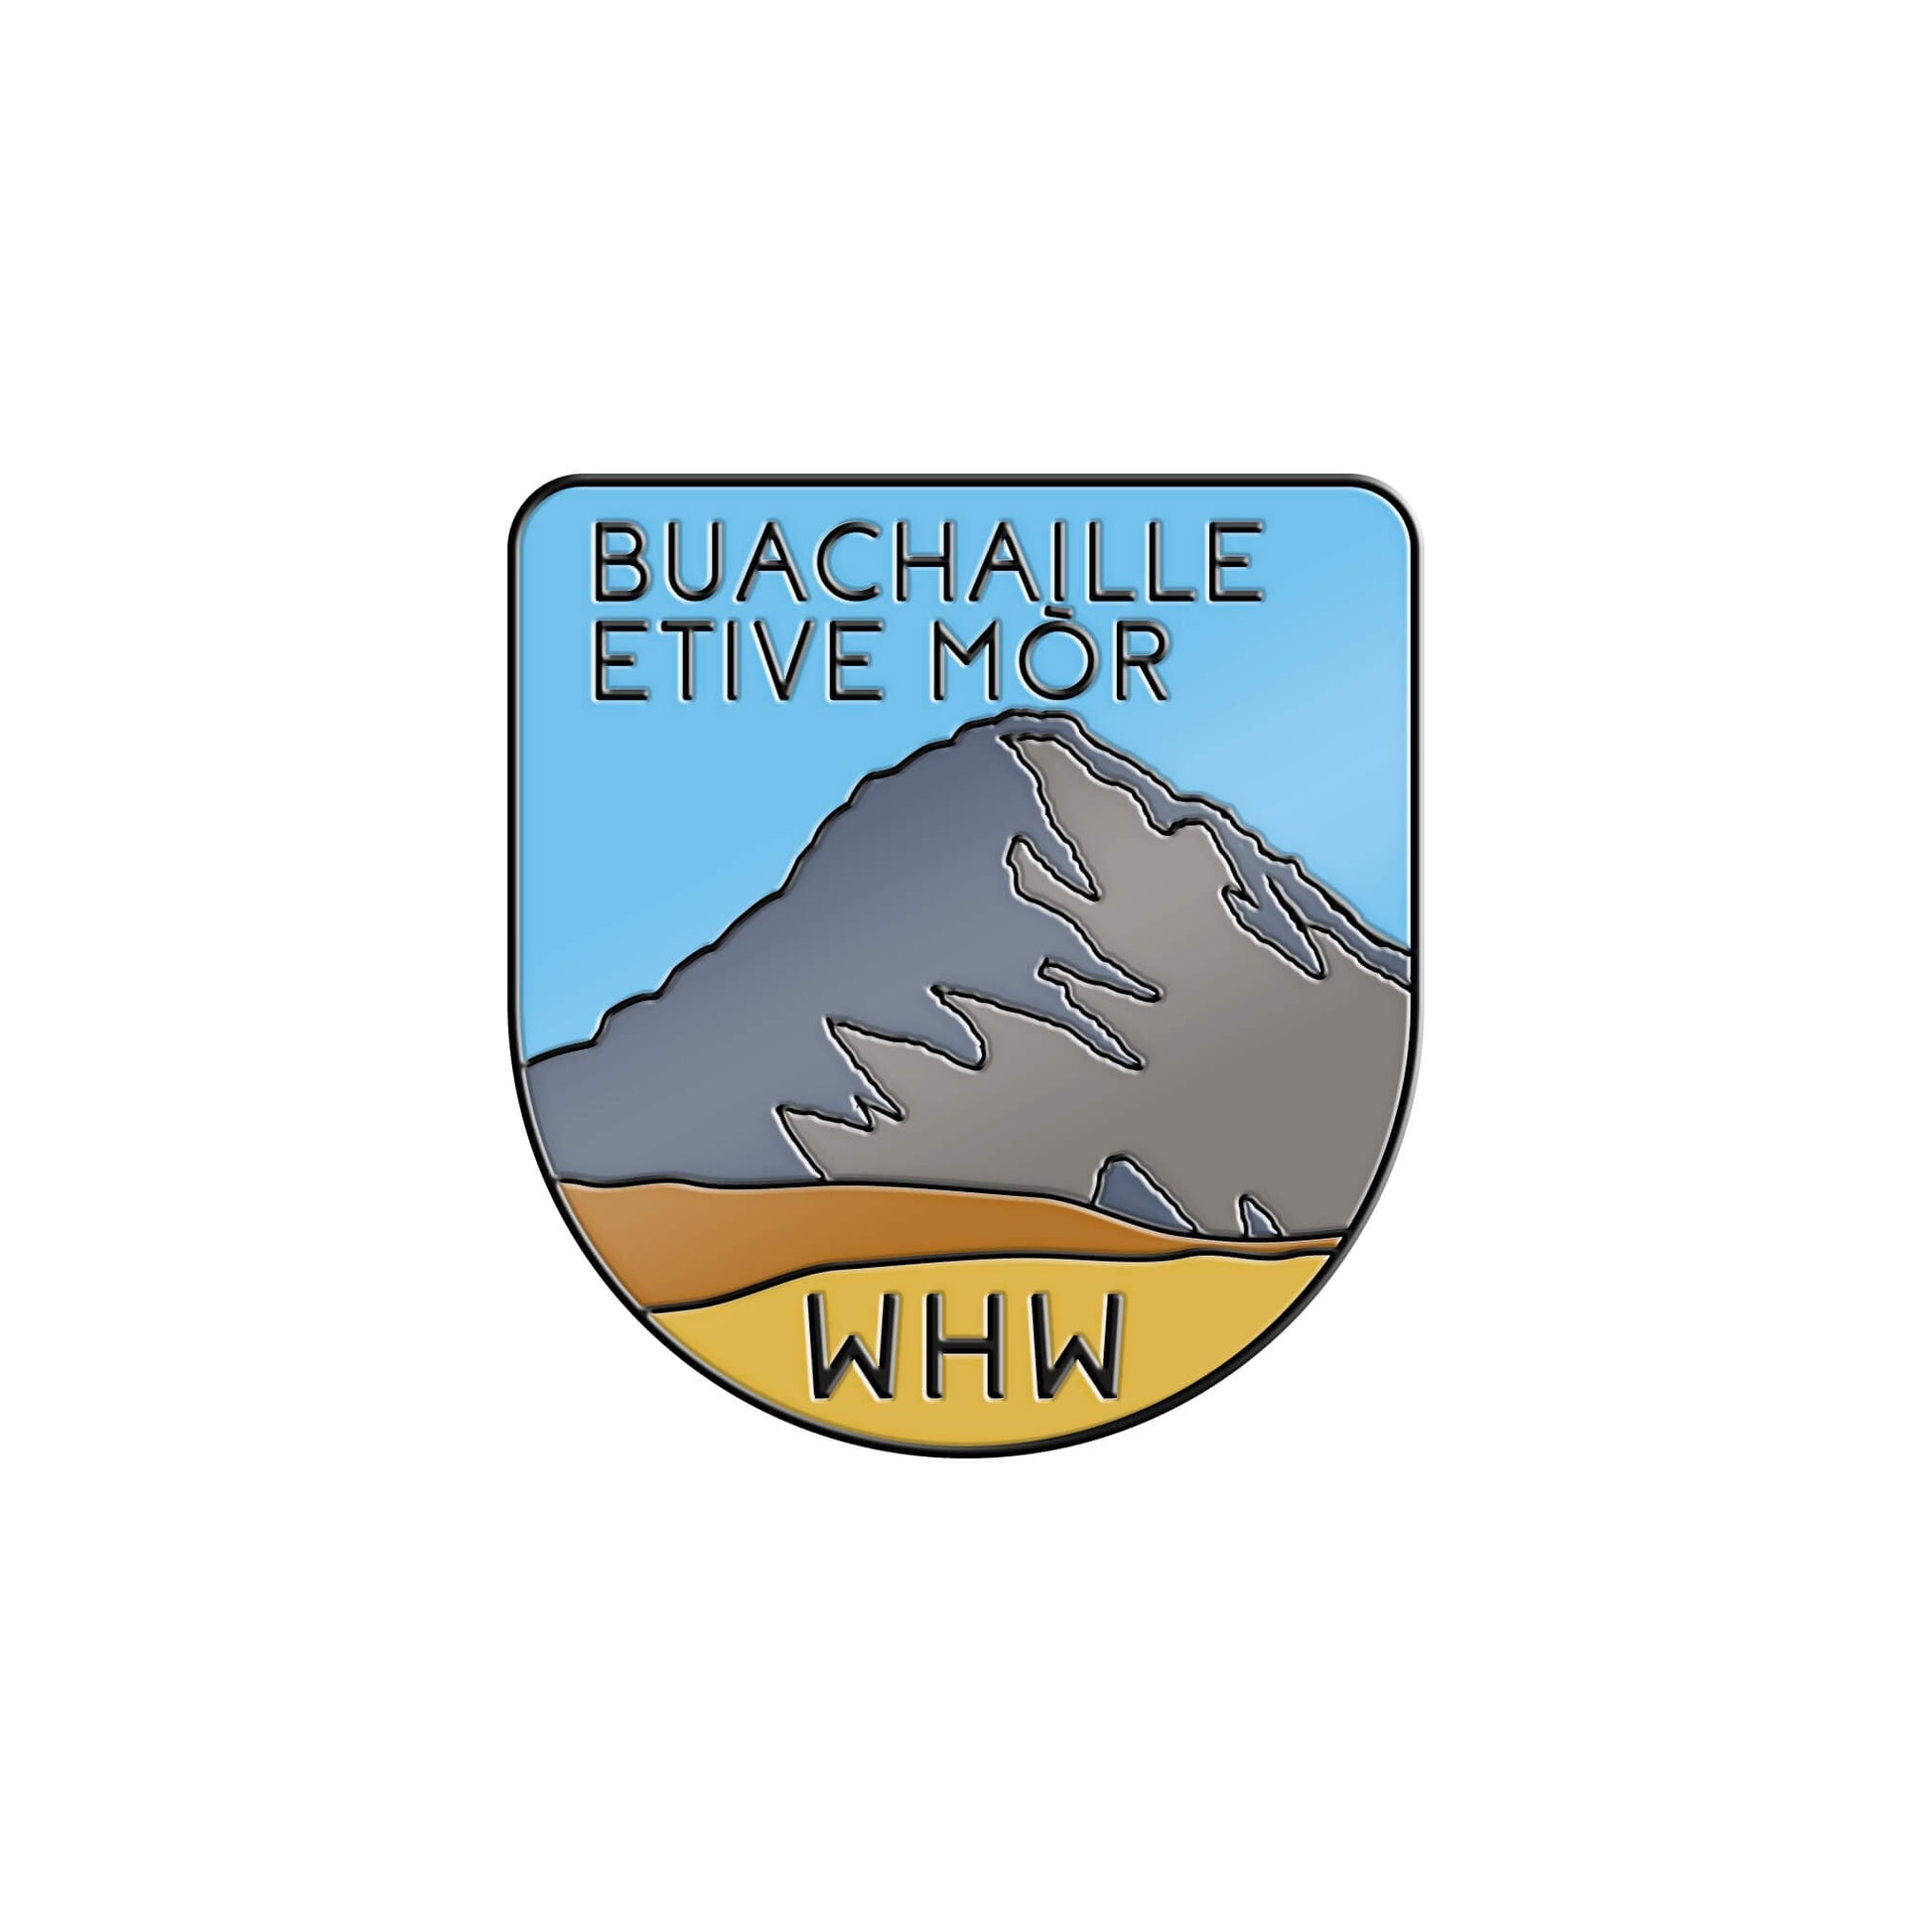 Buachaille Etive Mor Pin Badge - West Highland way